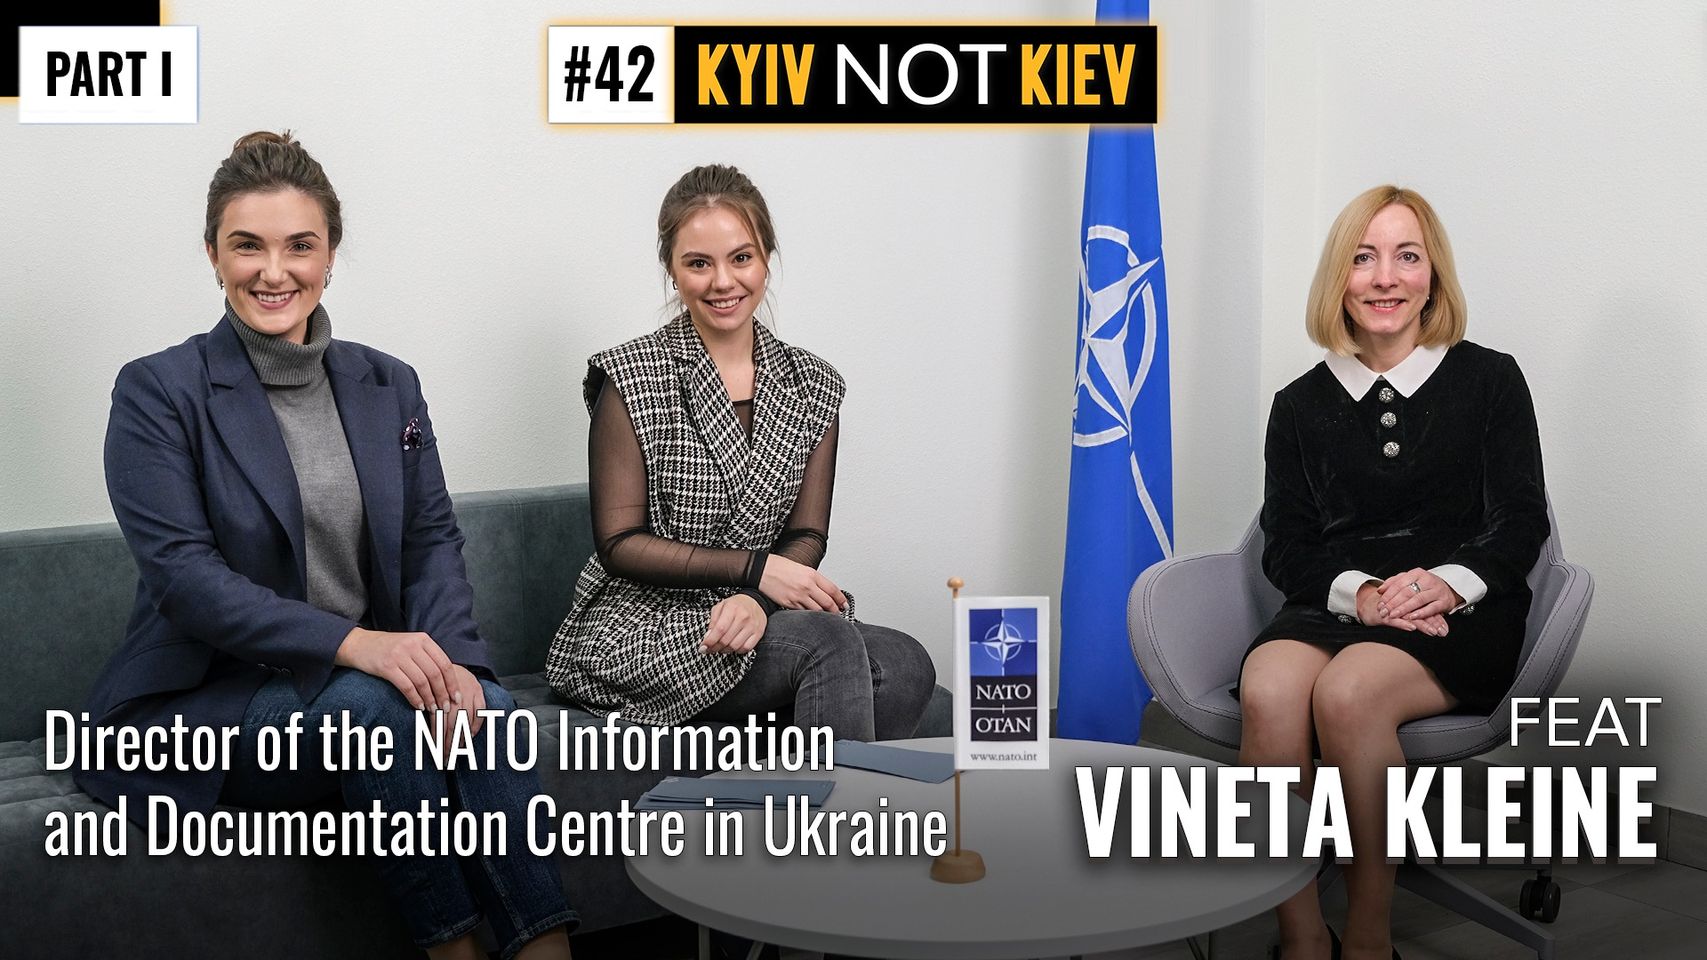 Interview with Vineta Kleine, Director of the NATO Information and Documentation Center in Ukraine (Photo: Kyiv Not Kiev)